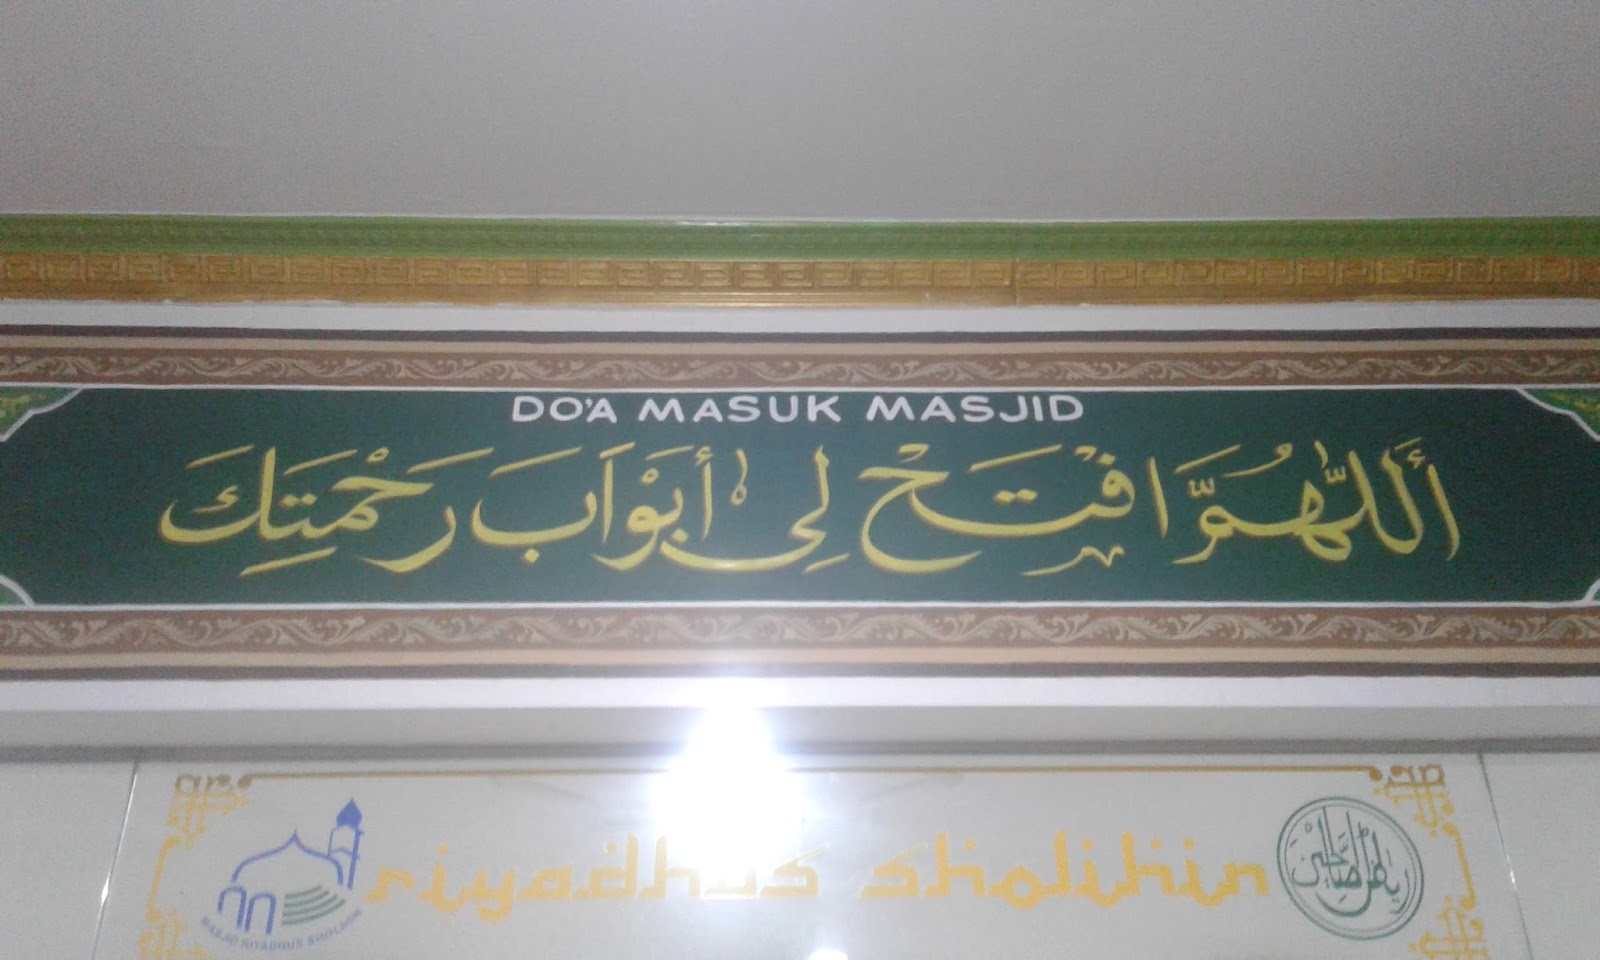 Tulisan Kaligrafi Doa Masuk Masjid Cikimmcom